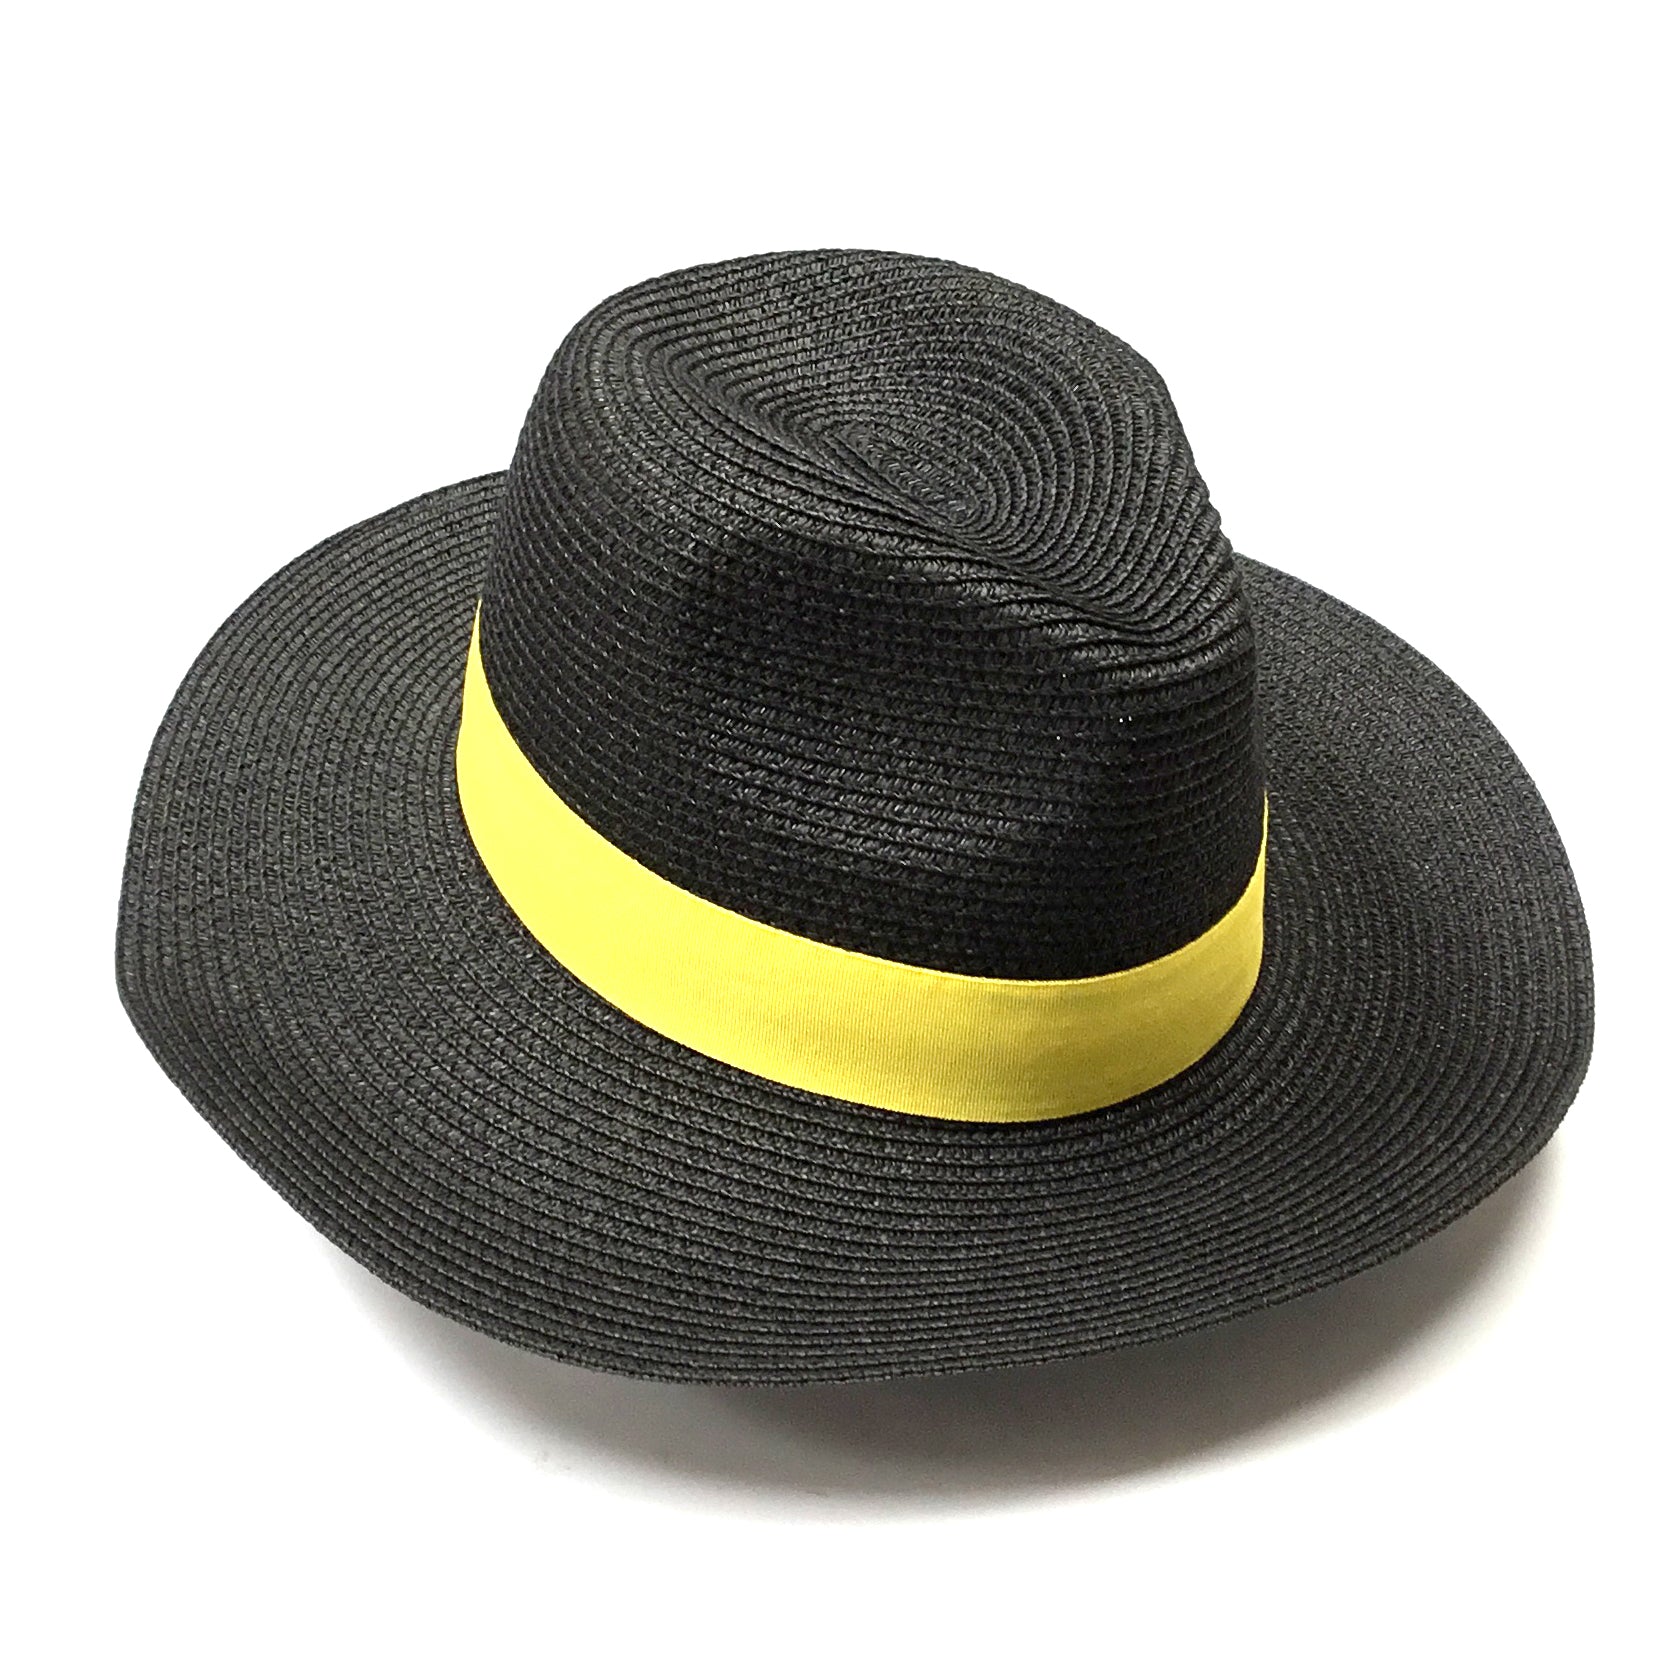 Folding Travel Panama Sun Hat - Black & Yellow